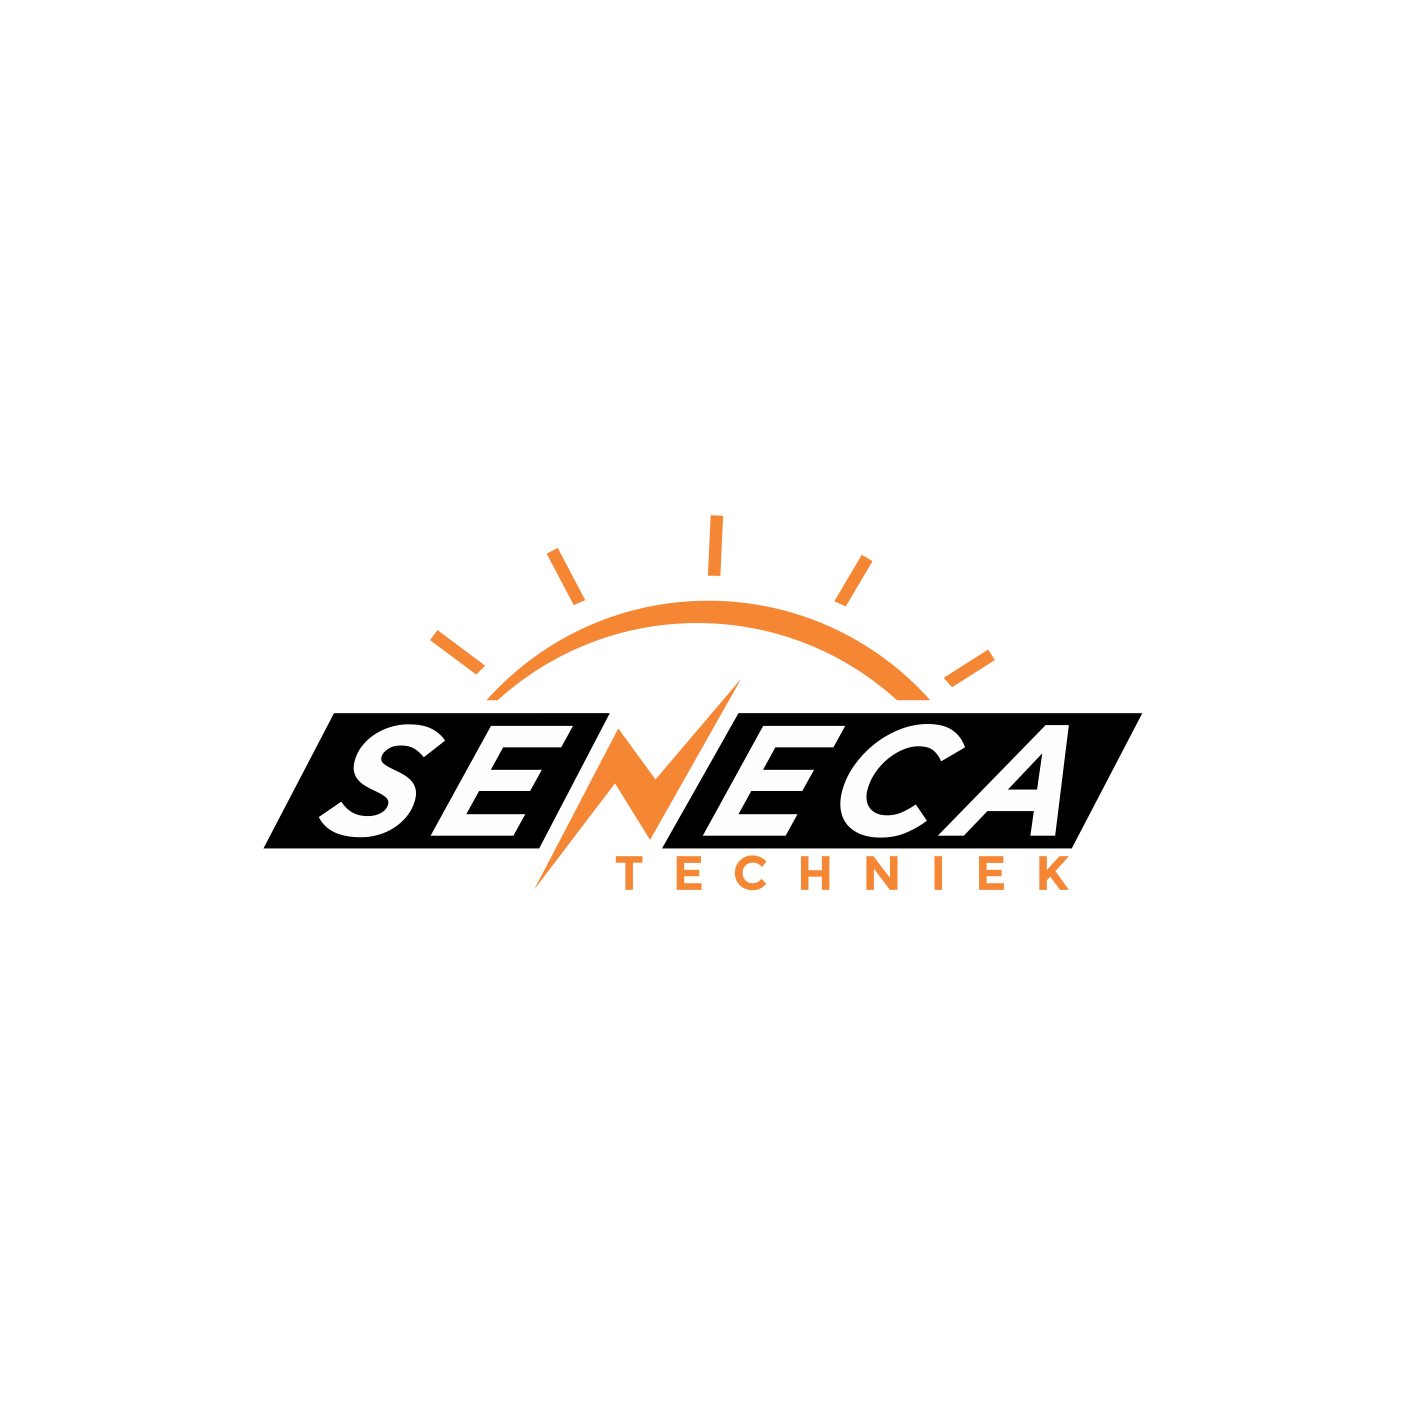 SGZE Deelnemer - Seneca Techniek